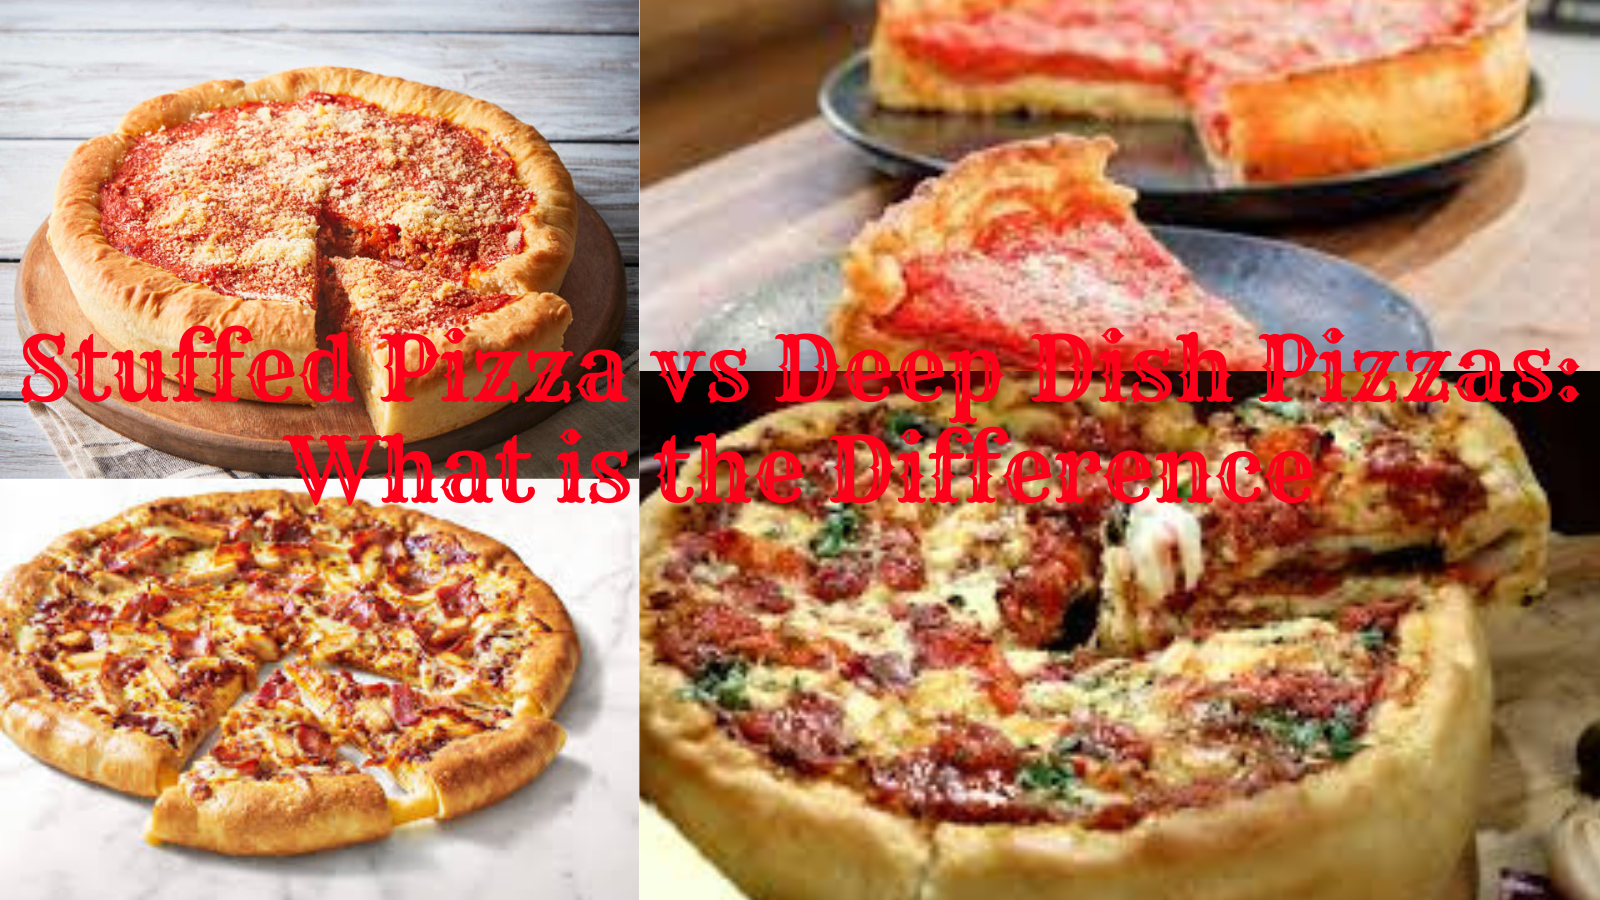 Stuffed Pizza vs Deep Dish Pizzas: Let's Compare